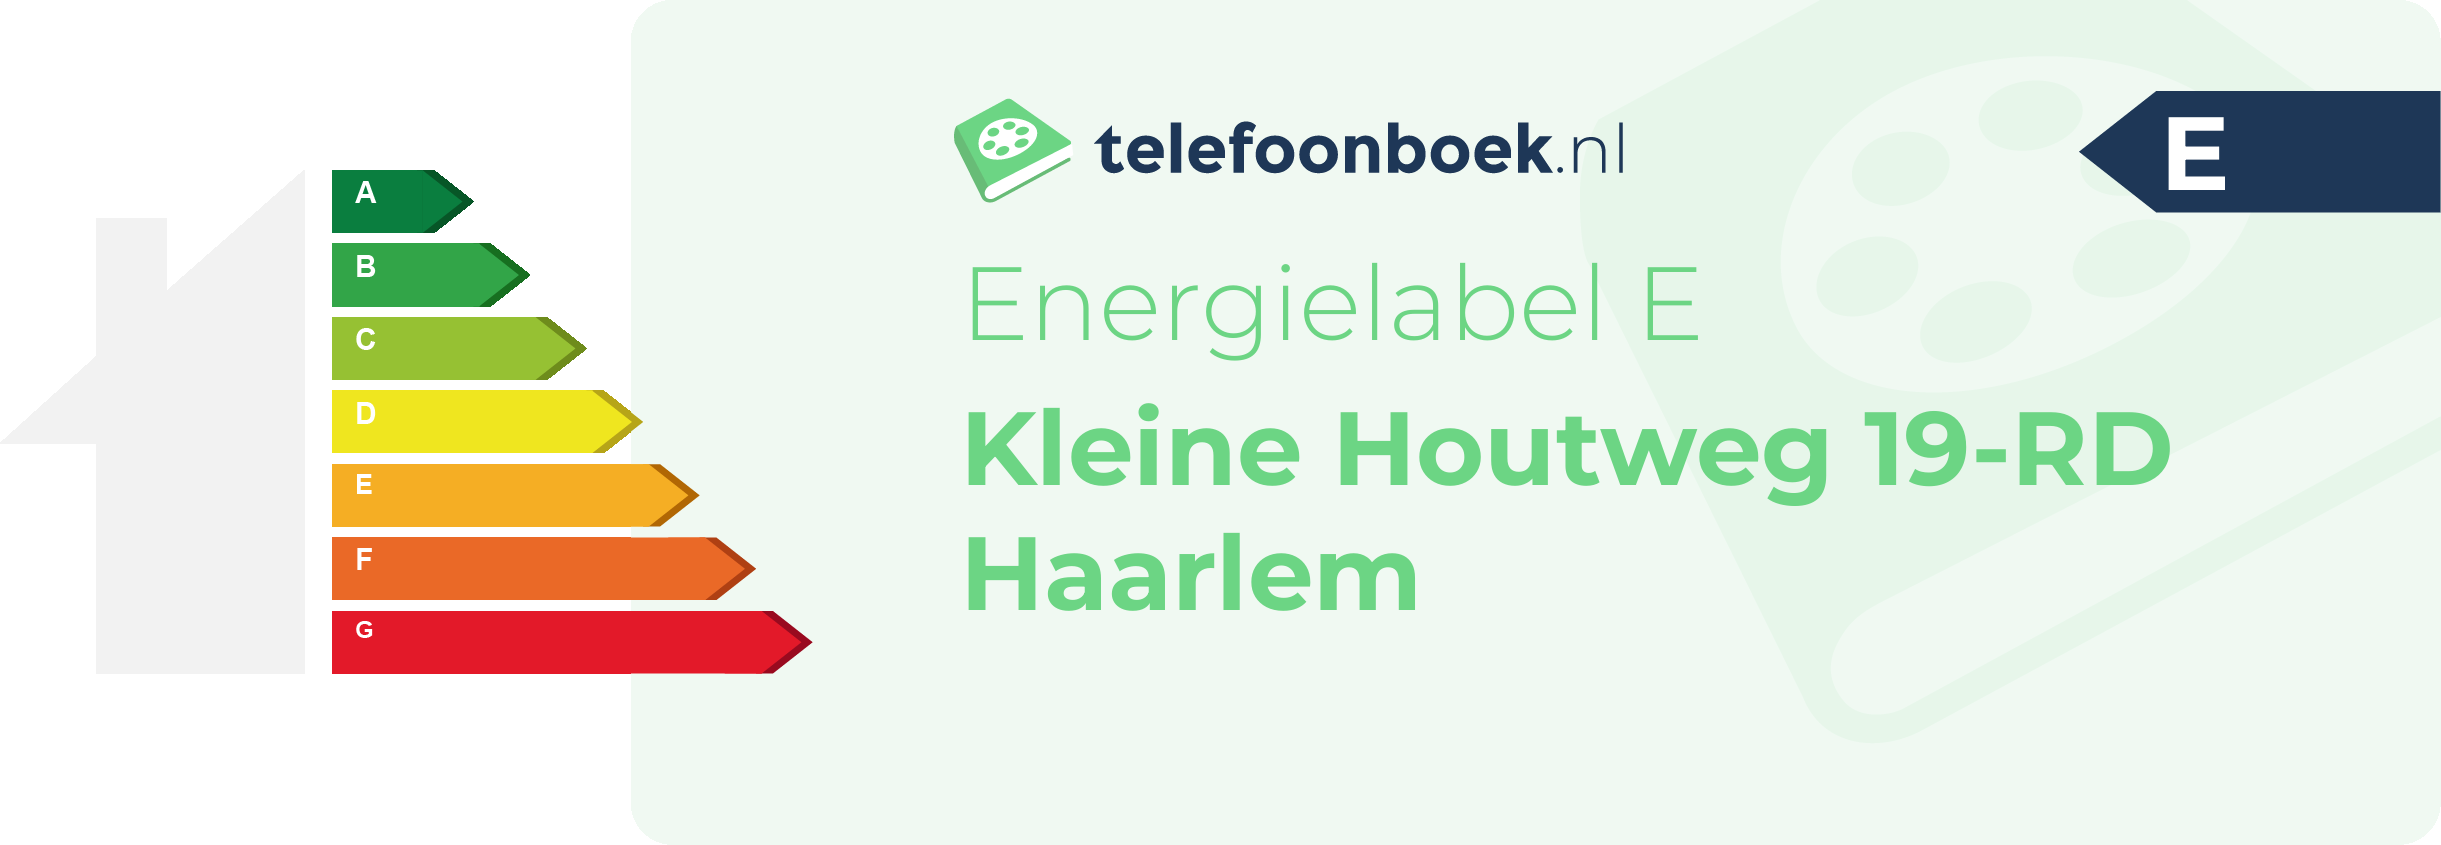 Energielabel Kleine Houtweg 19-RD Haarlem